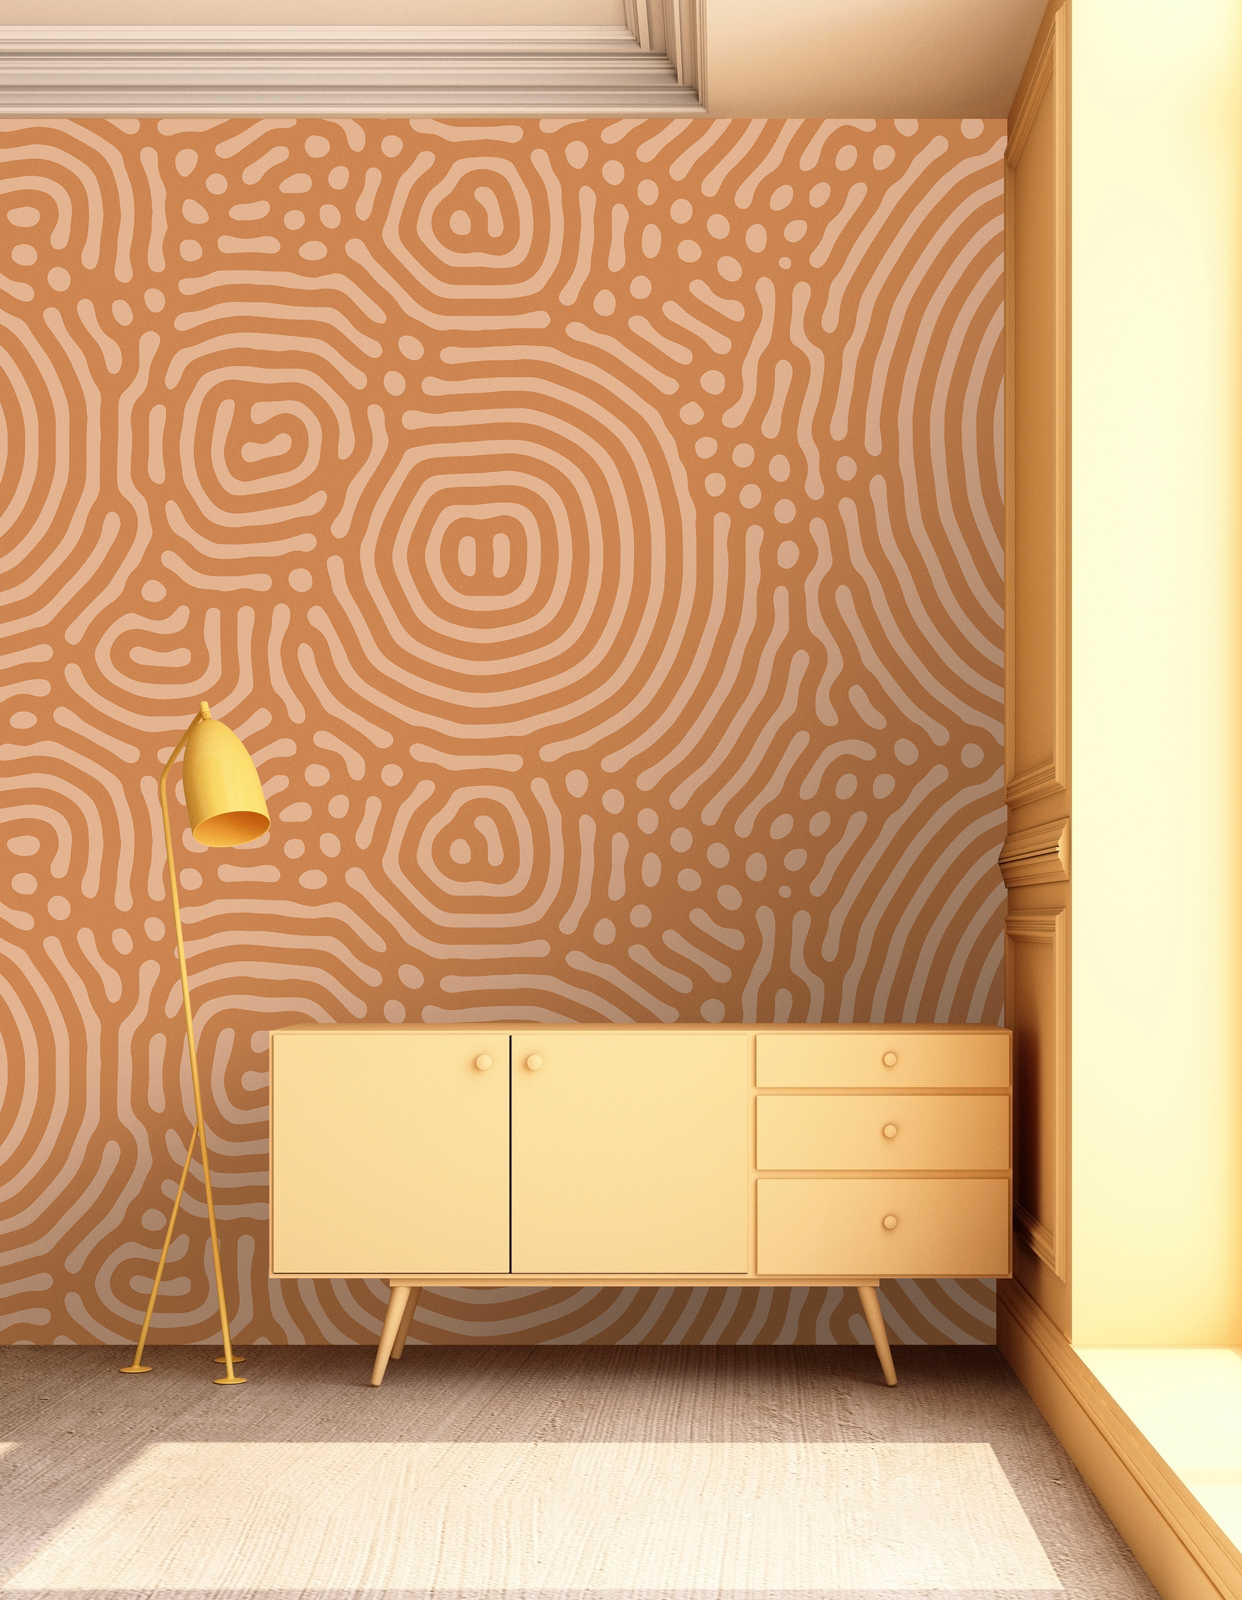             Sahel 2 - Orange photo wallpaper maze pattern terracotta
        